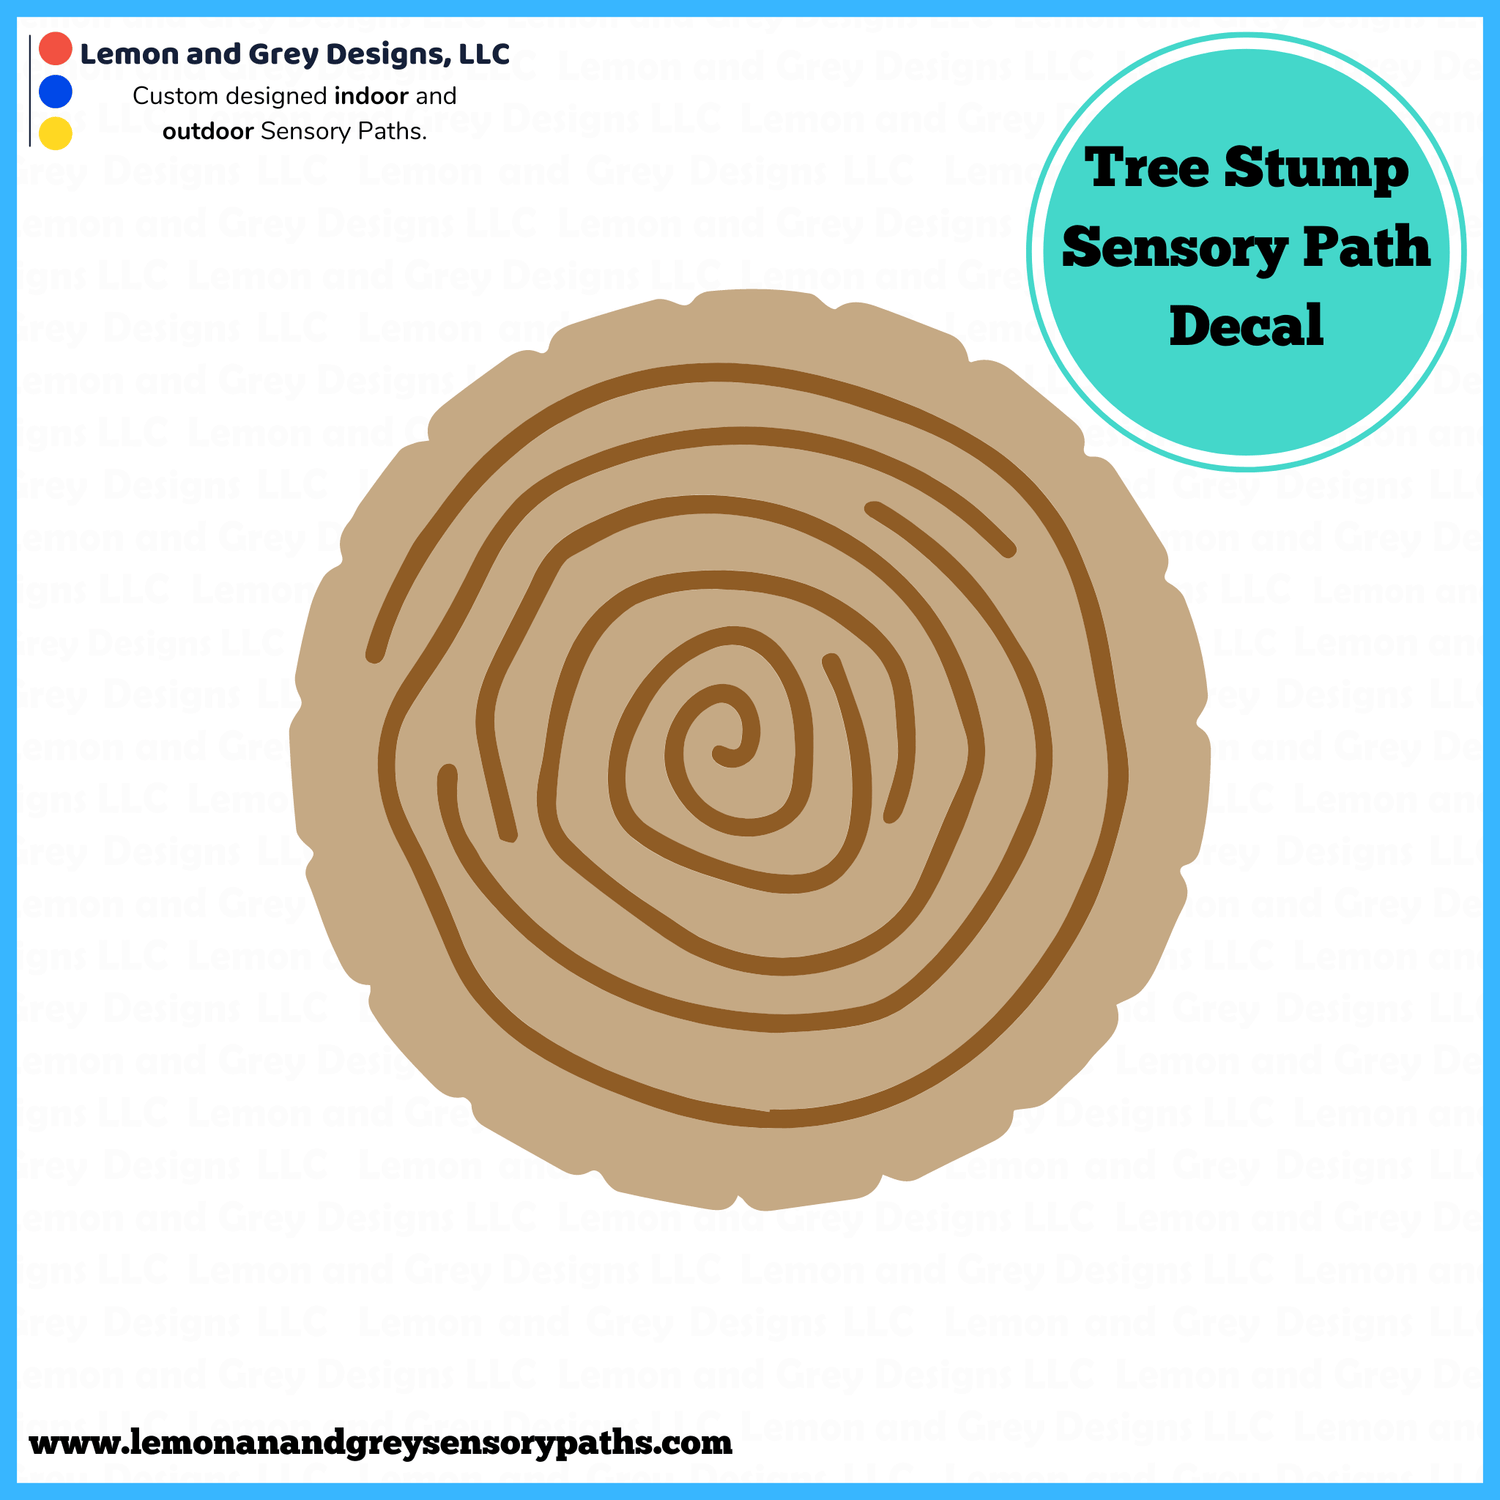 Tree Stump Sensory Path Decal